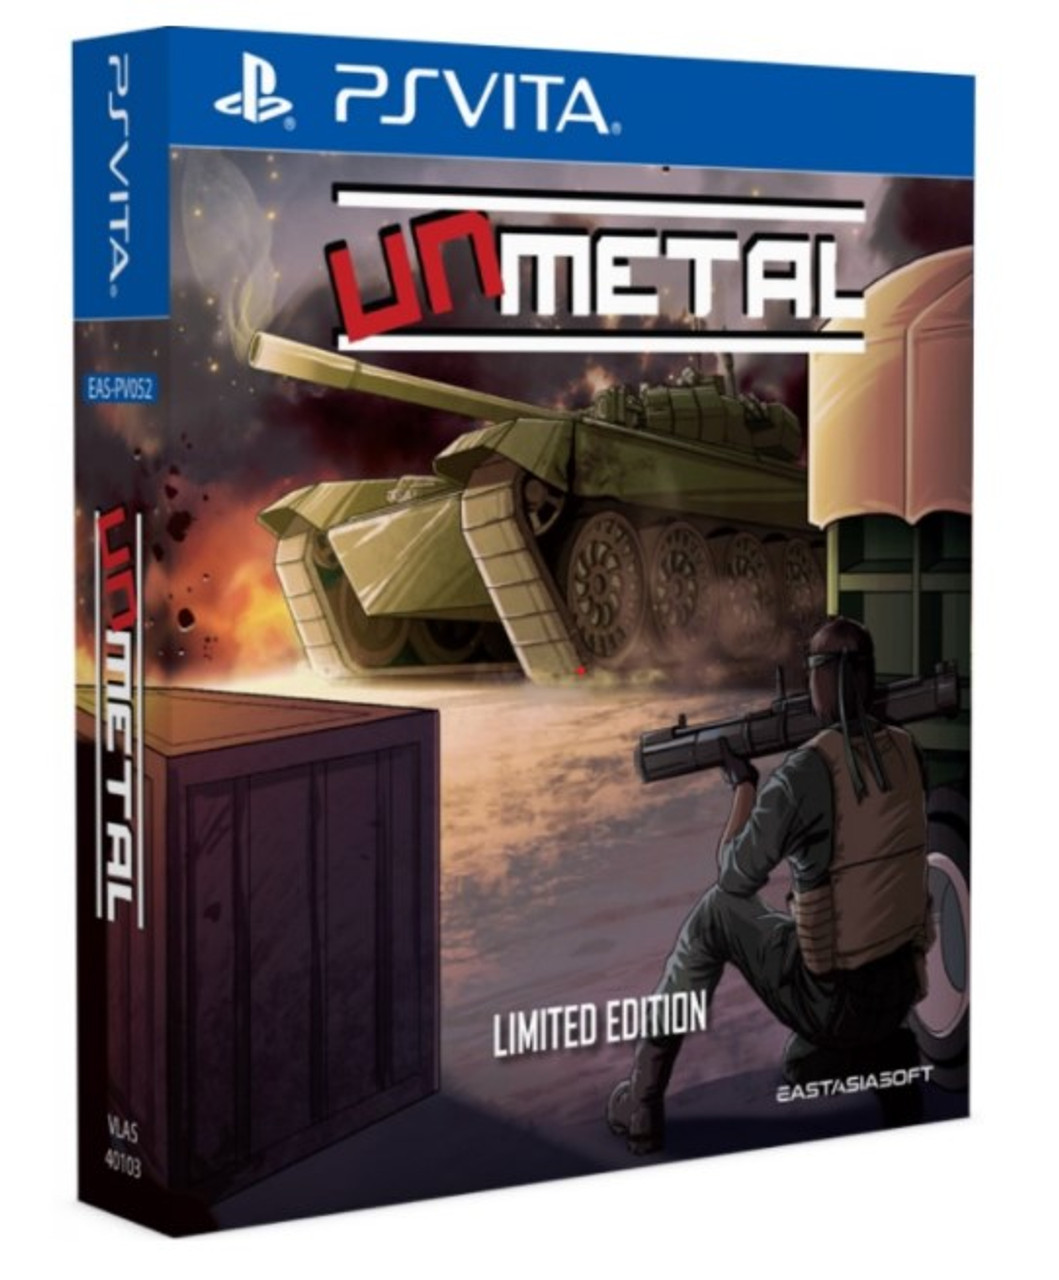 UnMetal LIMITED EDITION EastAsianSoft PlayStation Vita available at VideoGamesNewYork, NY